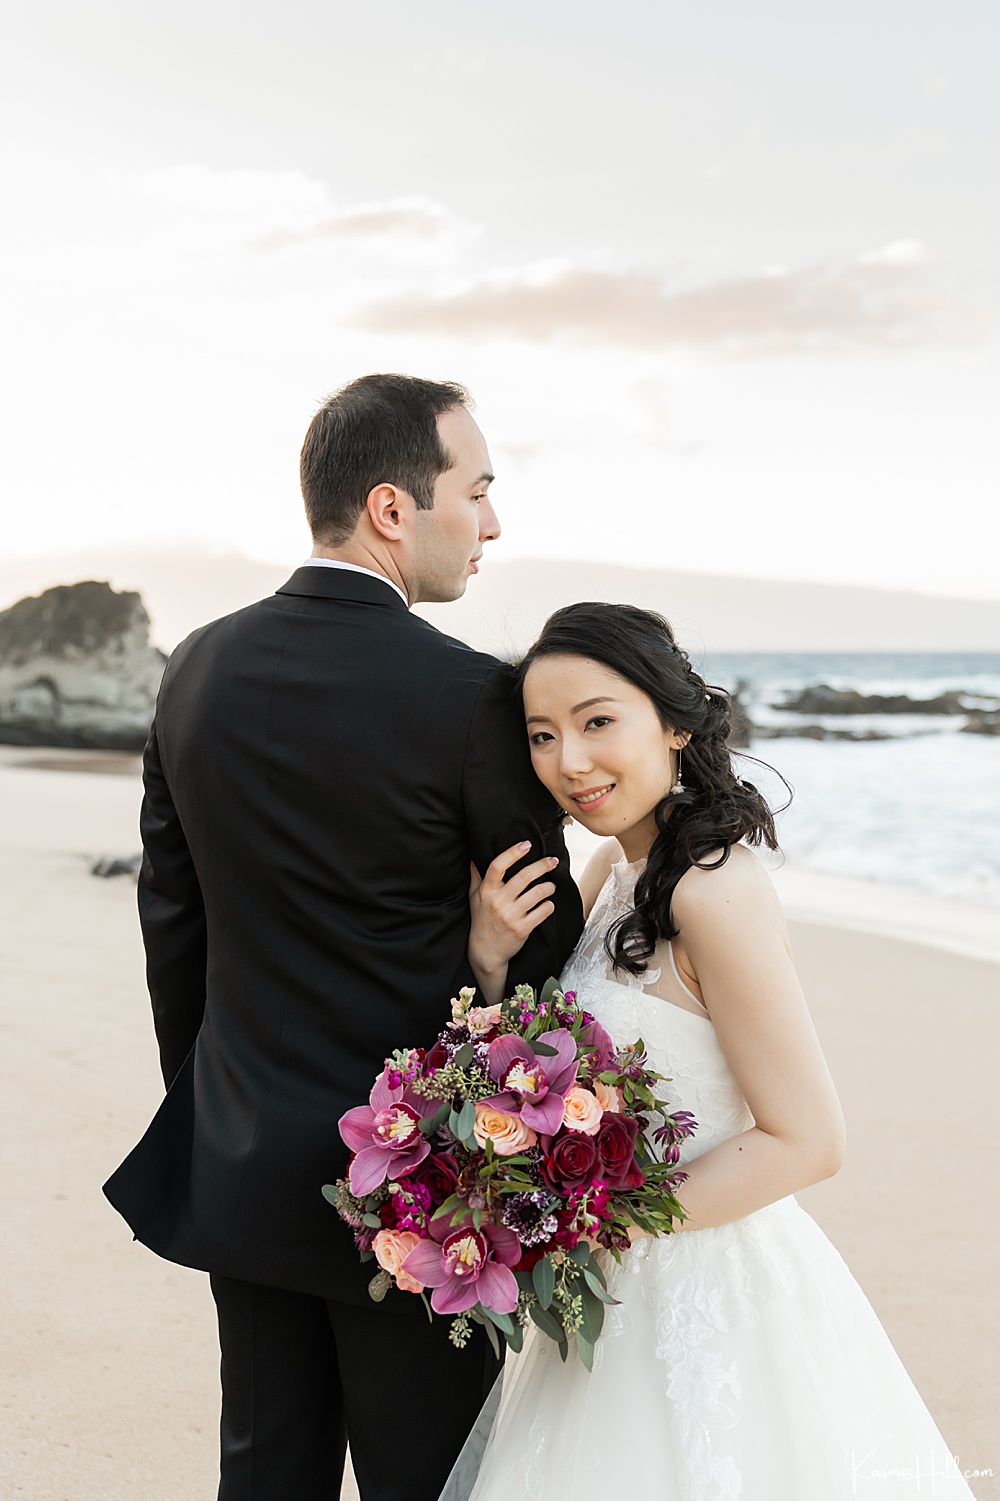 beach wedding inspiration - fall bouquet - beach bridal ideas - gorgeous beach wedding - purple wedding bouquet 